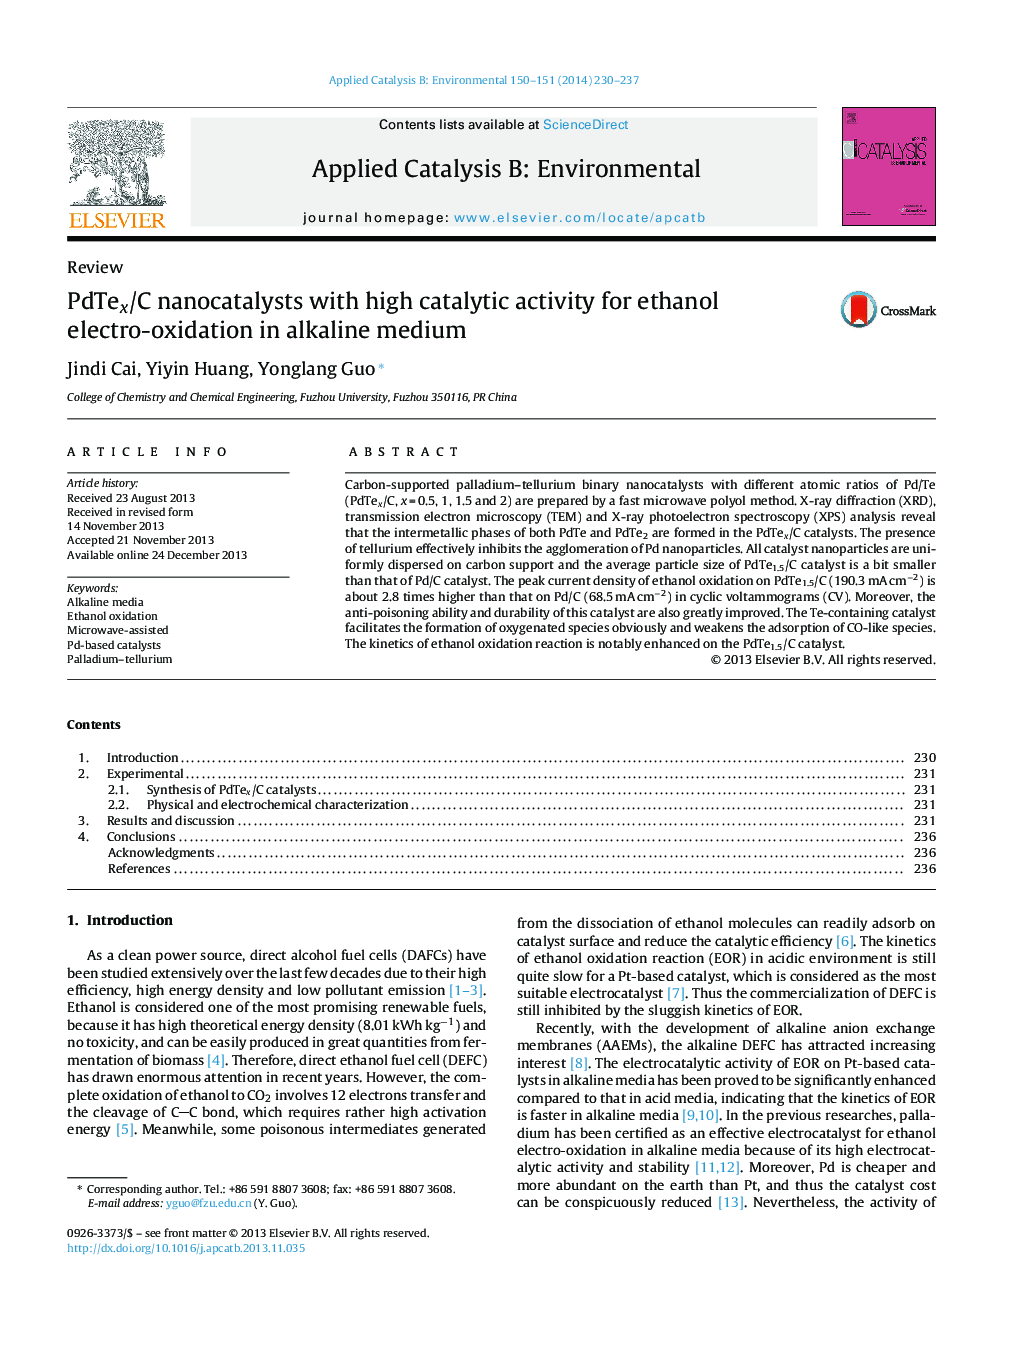 PdTex/C nanocatalysts with high catalytic activity for ethanol electro-oxidation in alkaline medium